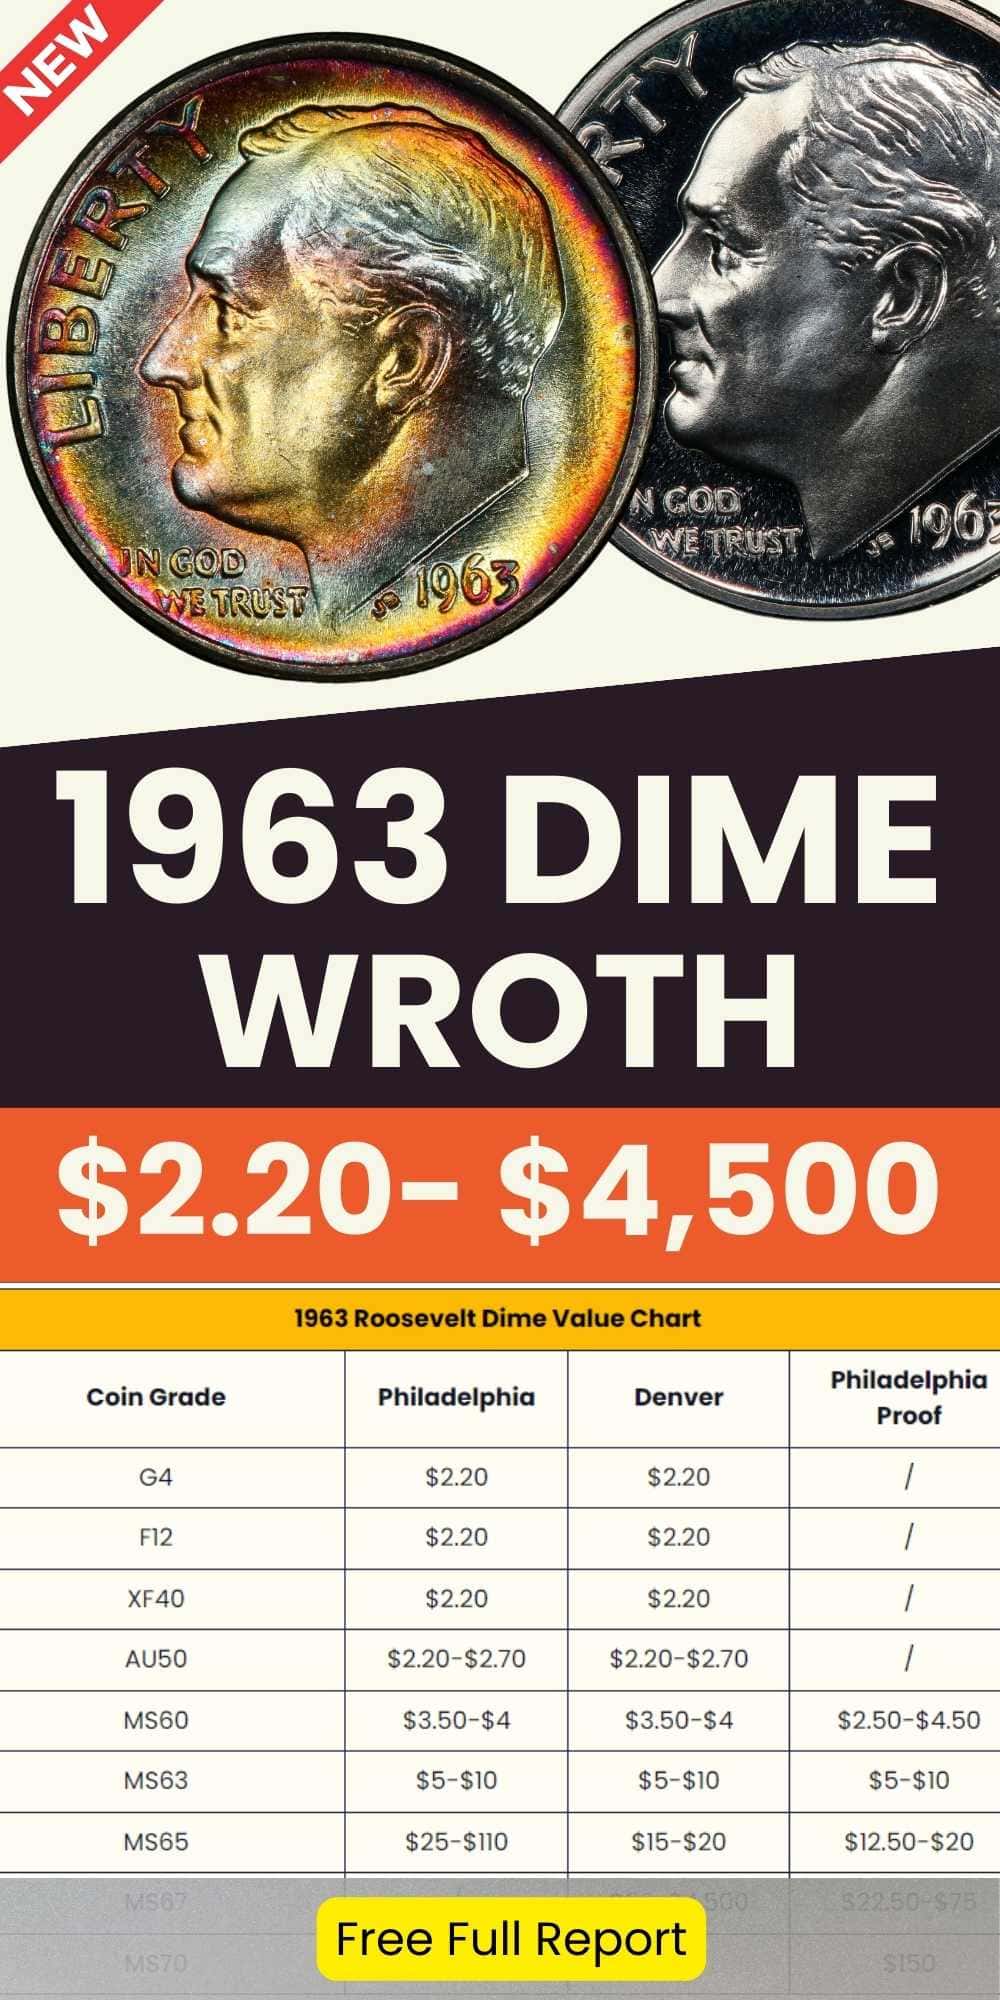 1963 Roosevelt Dime Value CHART